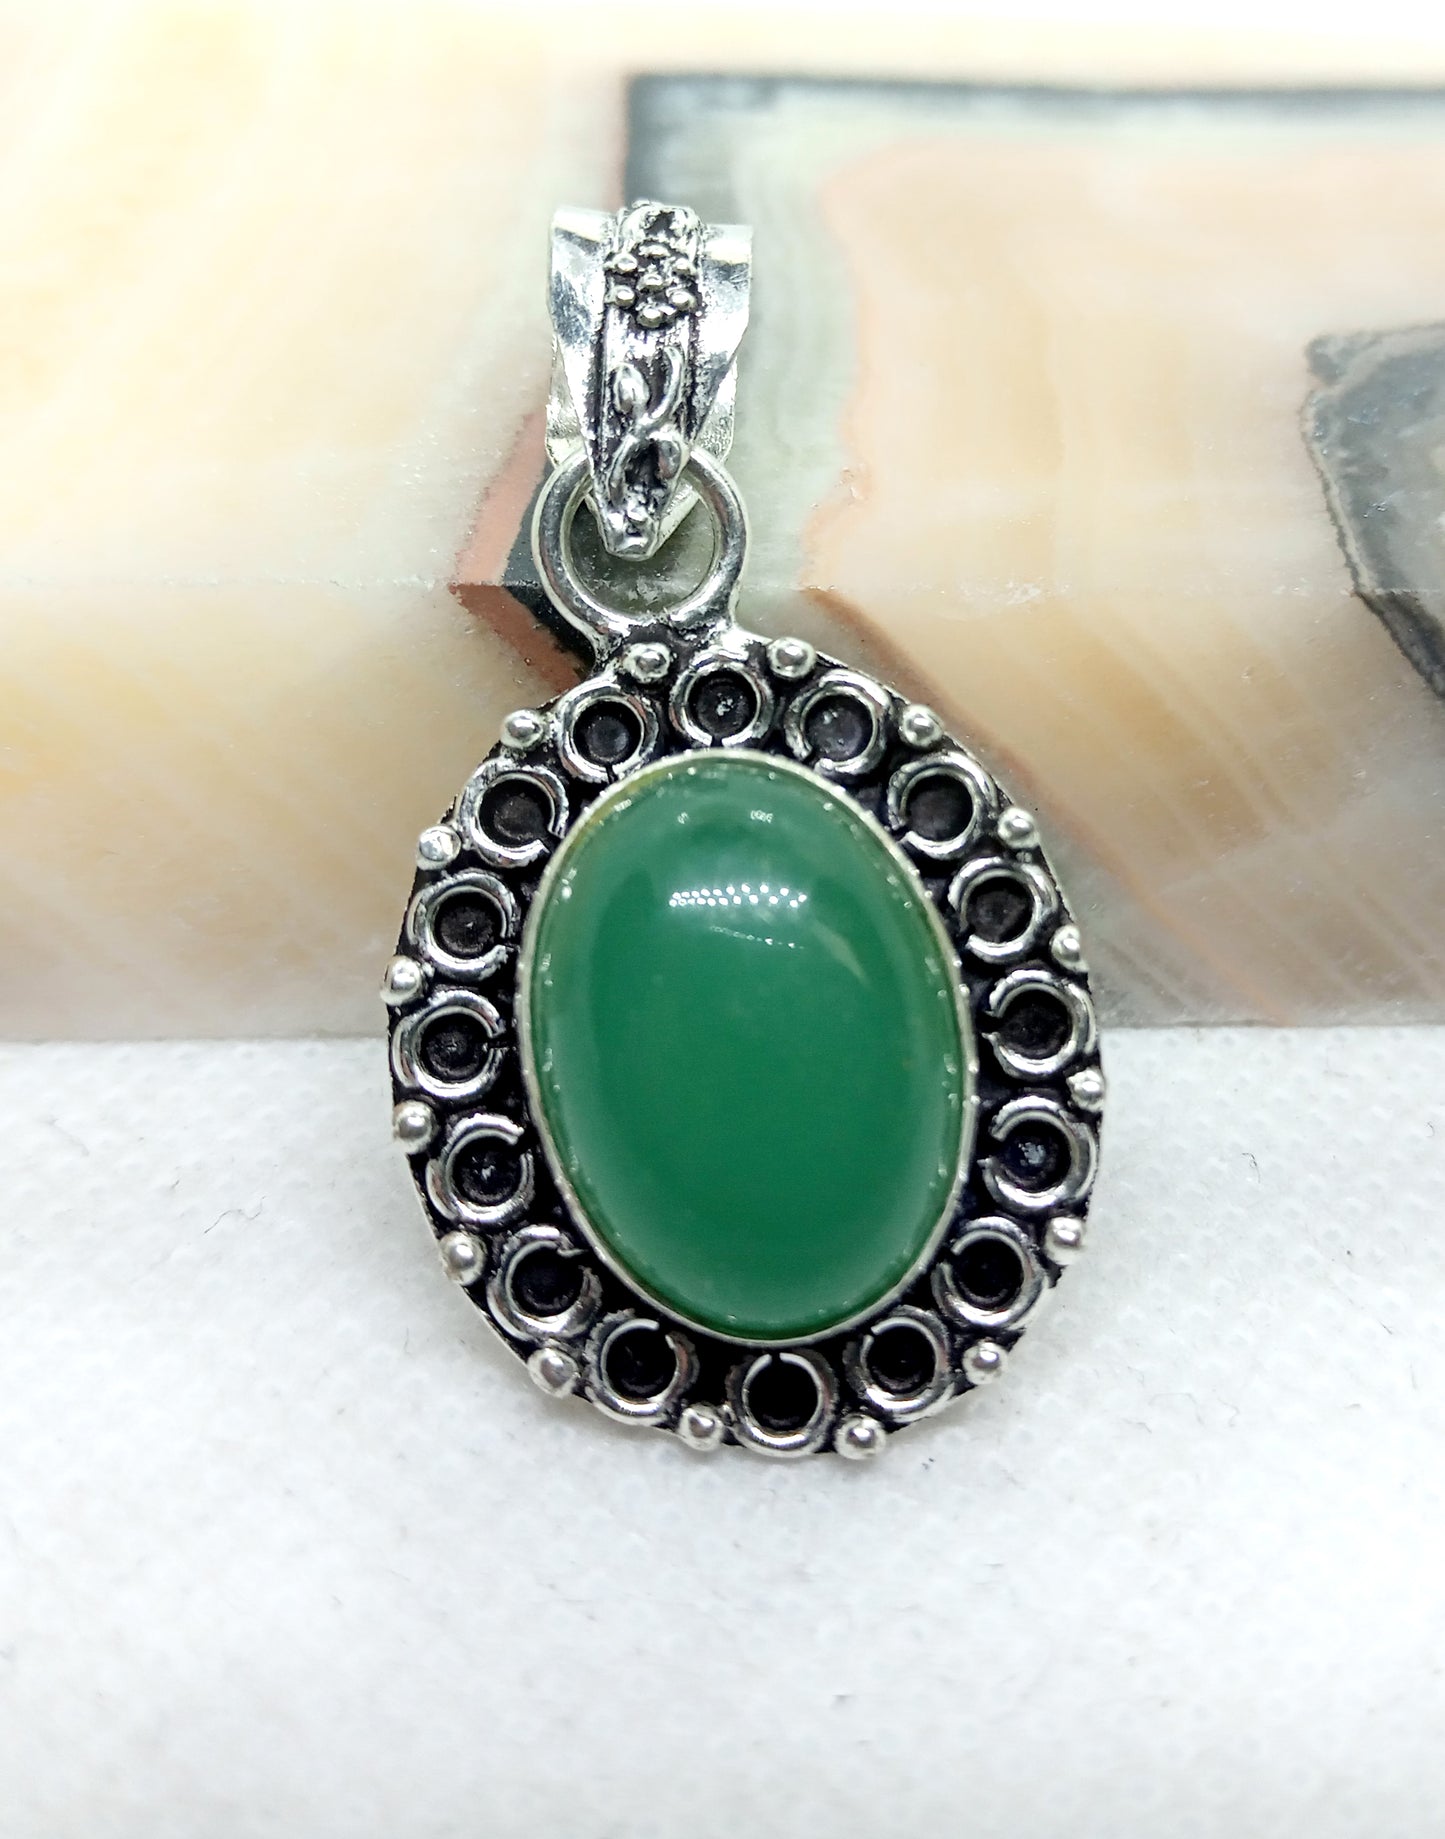 Green onyx pendant